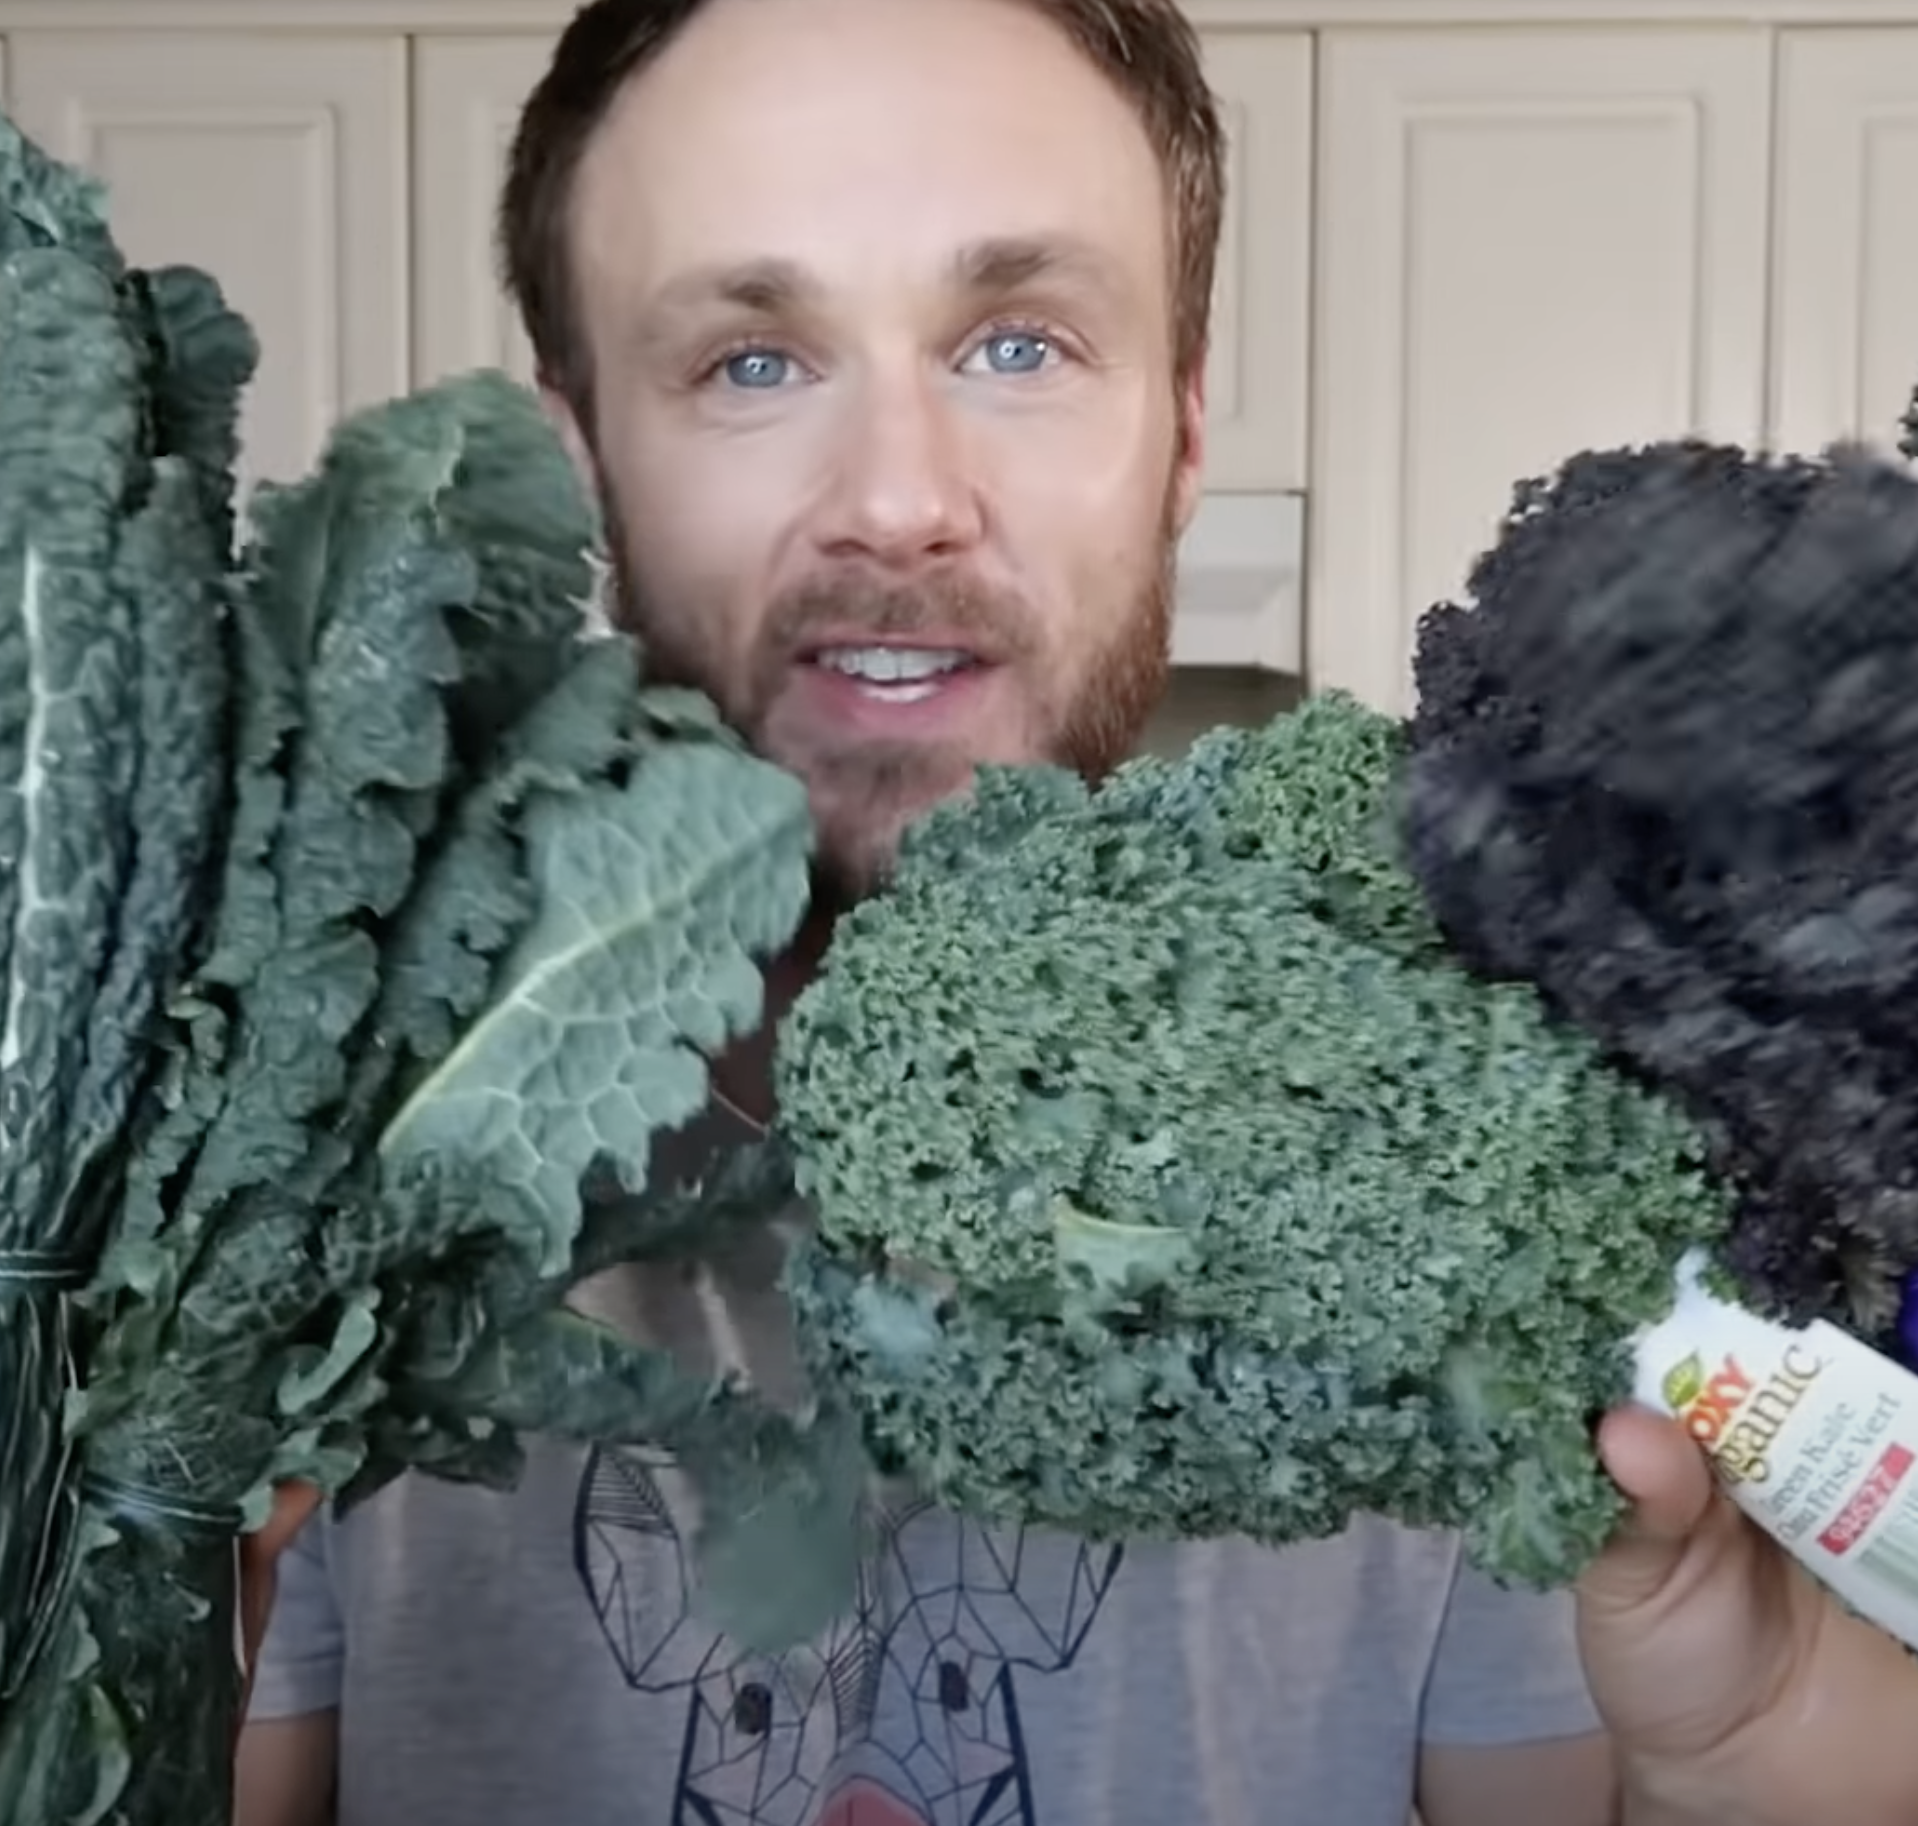 Man promoting kale on YouTube